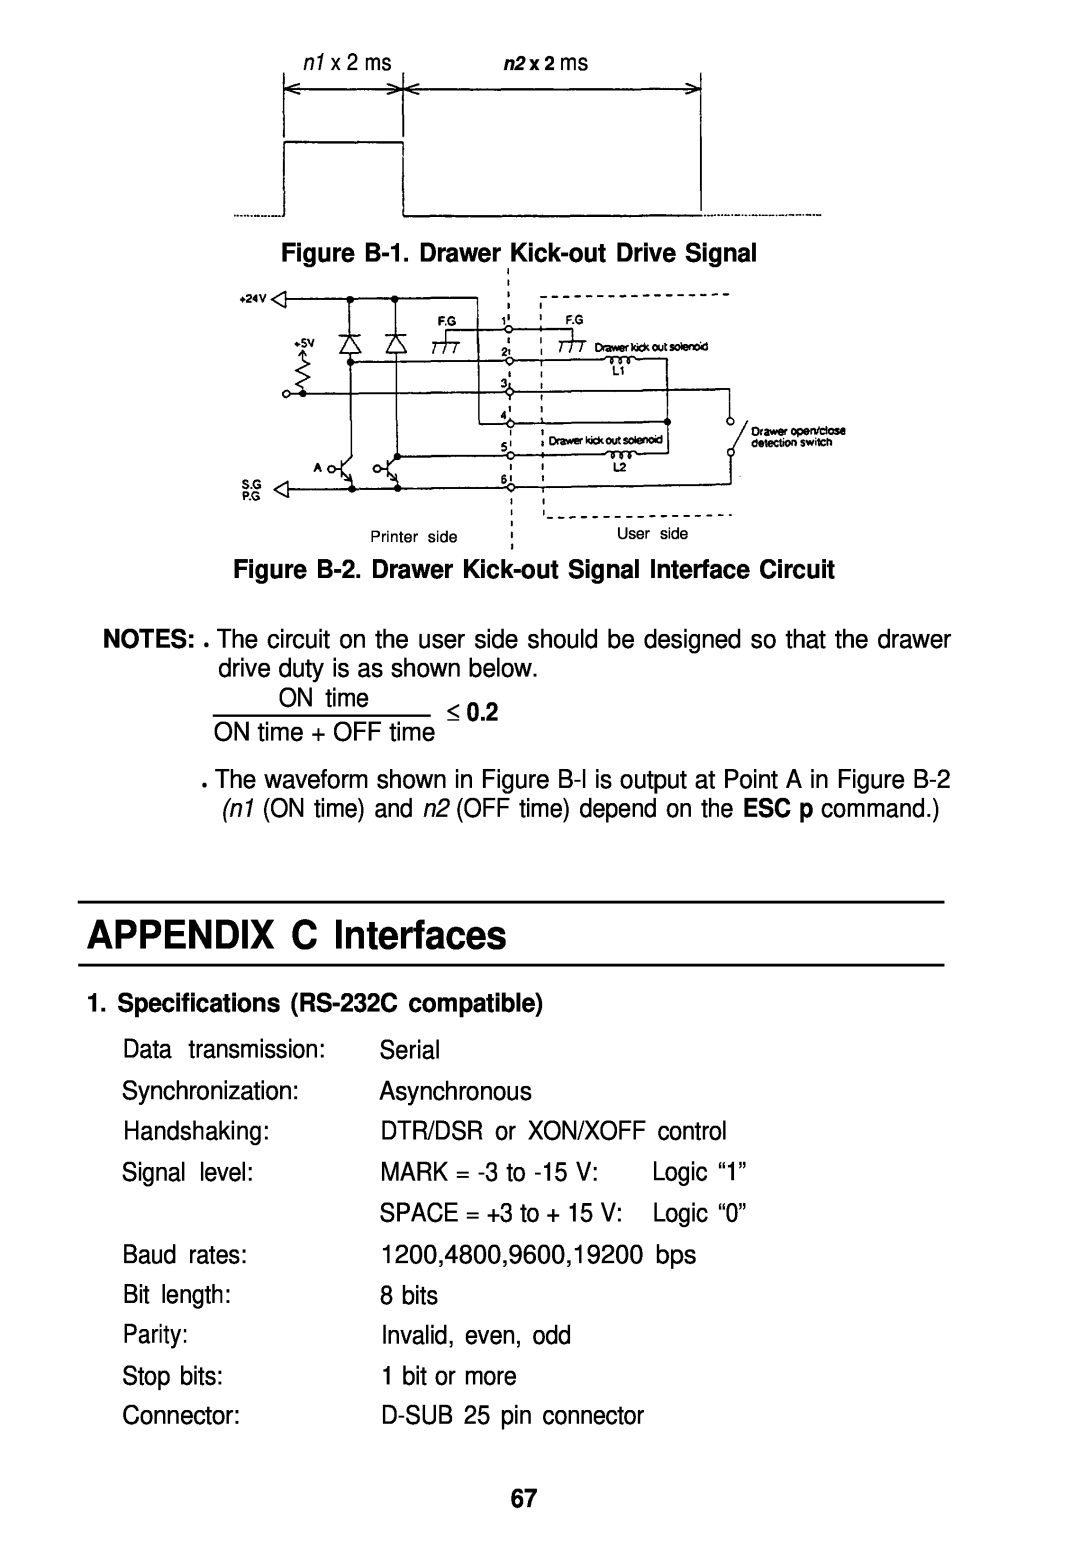 Seiko Group TM-L60 APPENDIX C Interfaces, Figure B-1. Drawer Kick-out Drive Signal, Specifications RS-232C compatible 